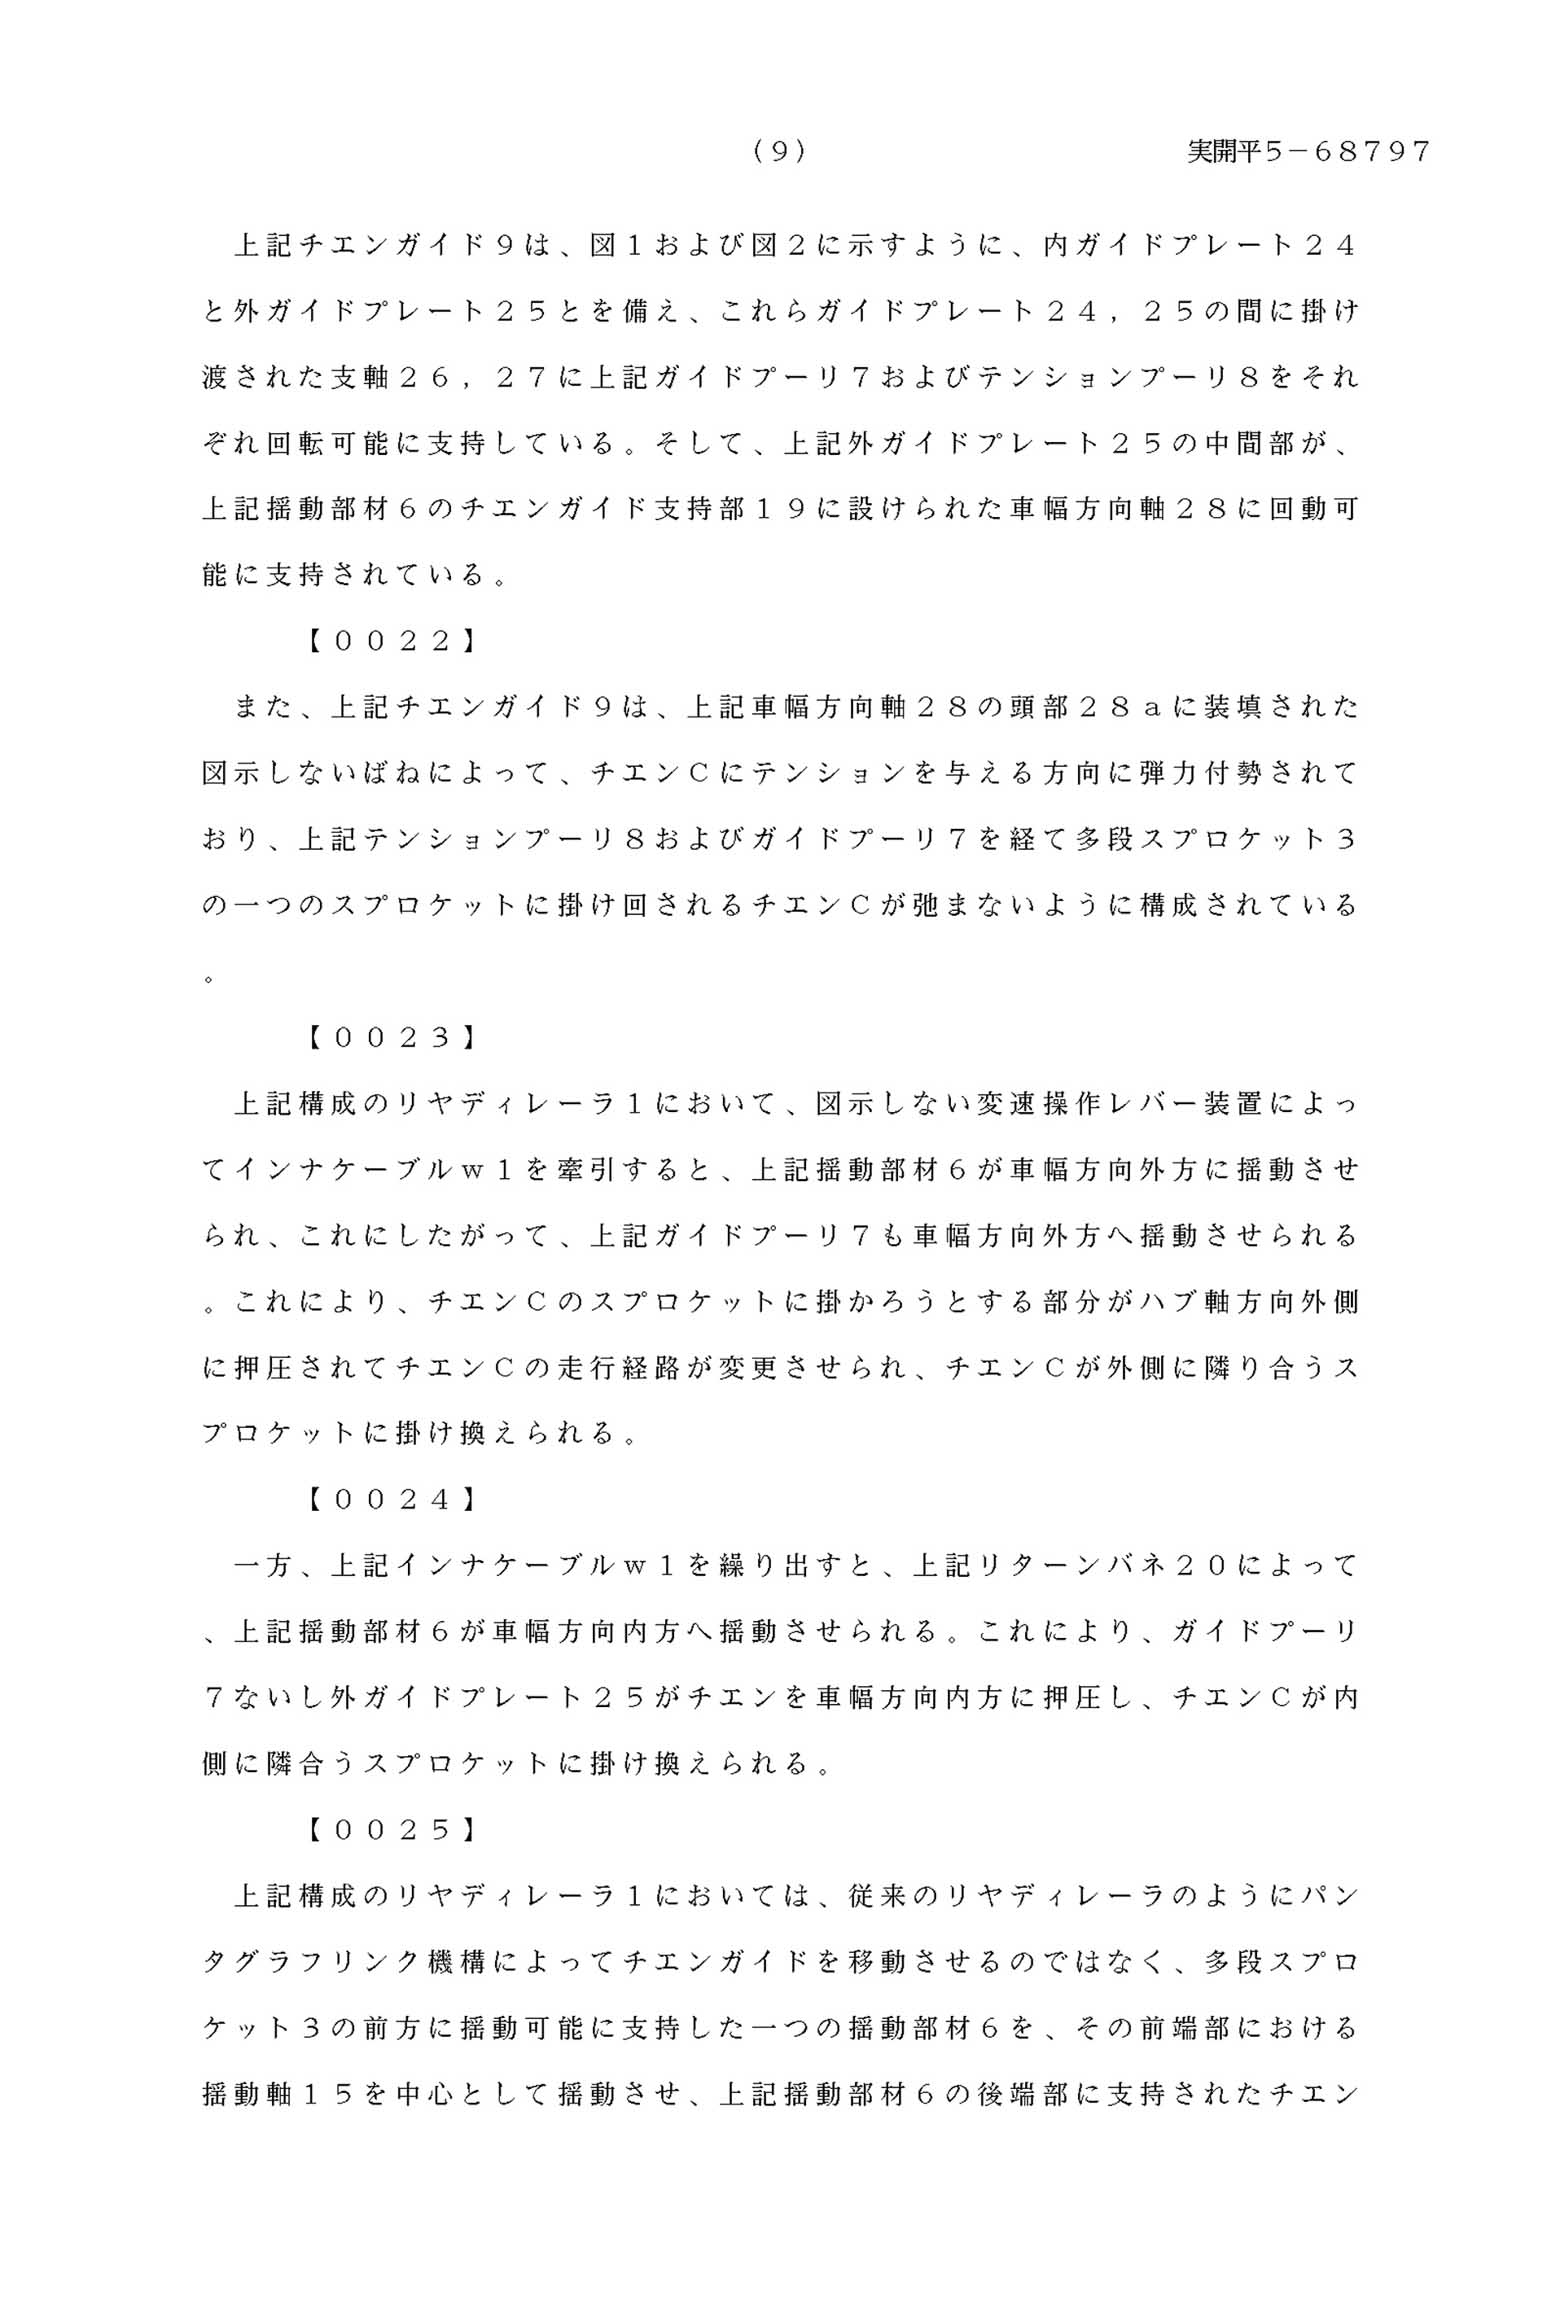 Japanese Patent H5-68797 scan 9 main image